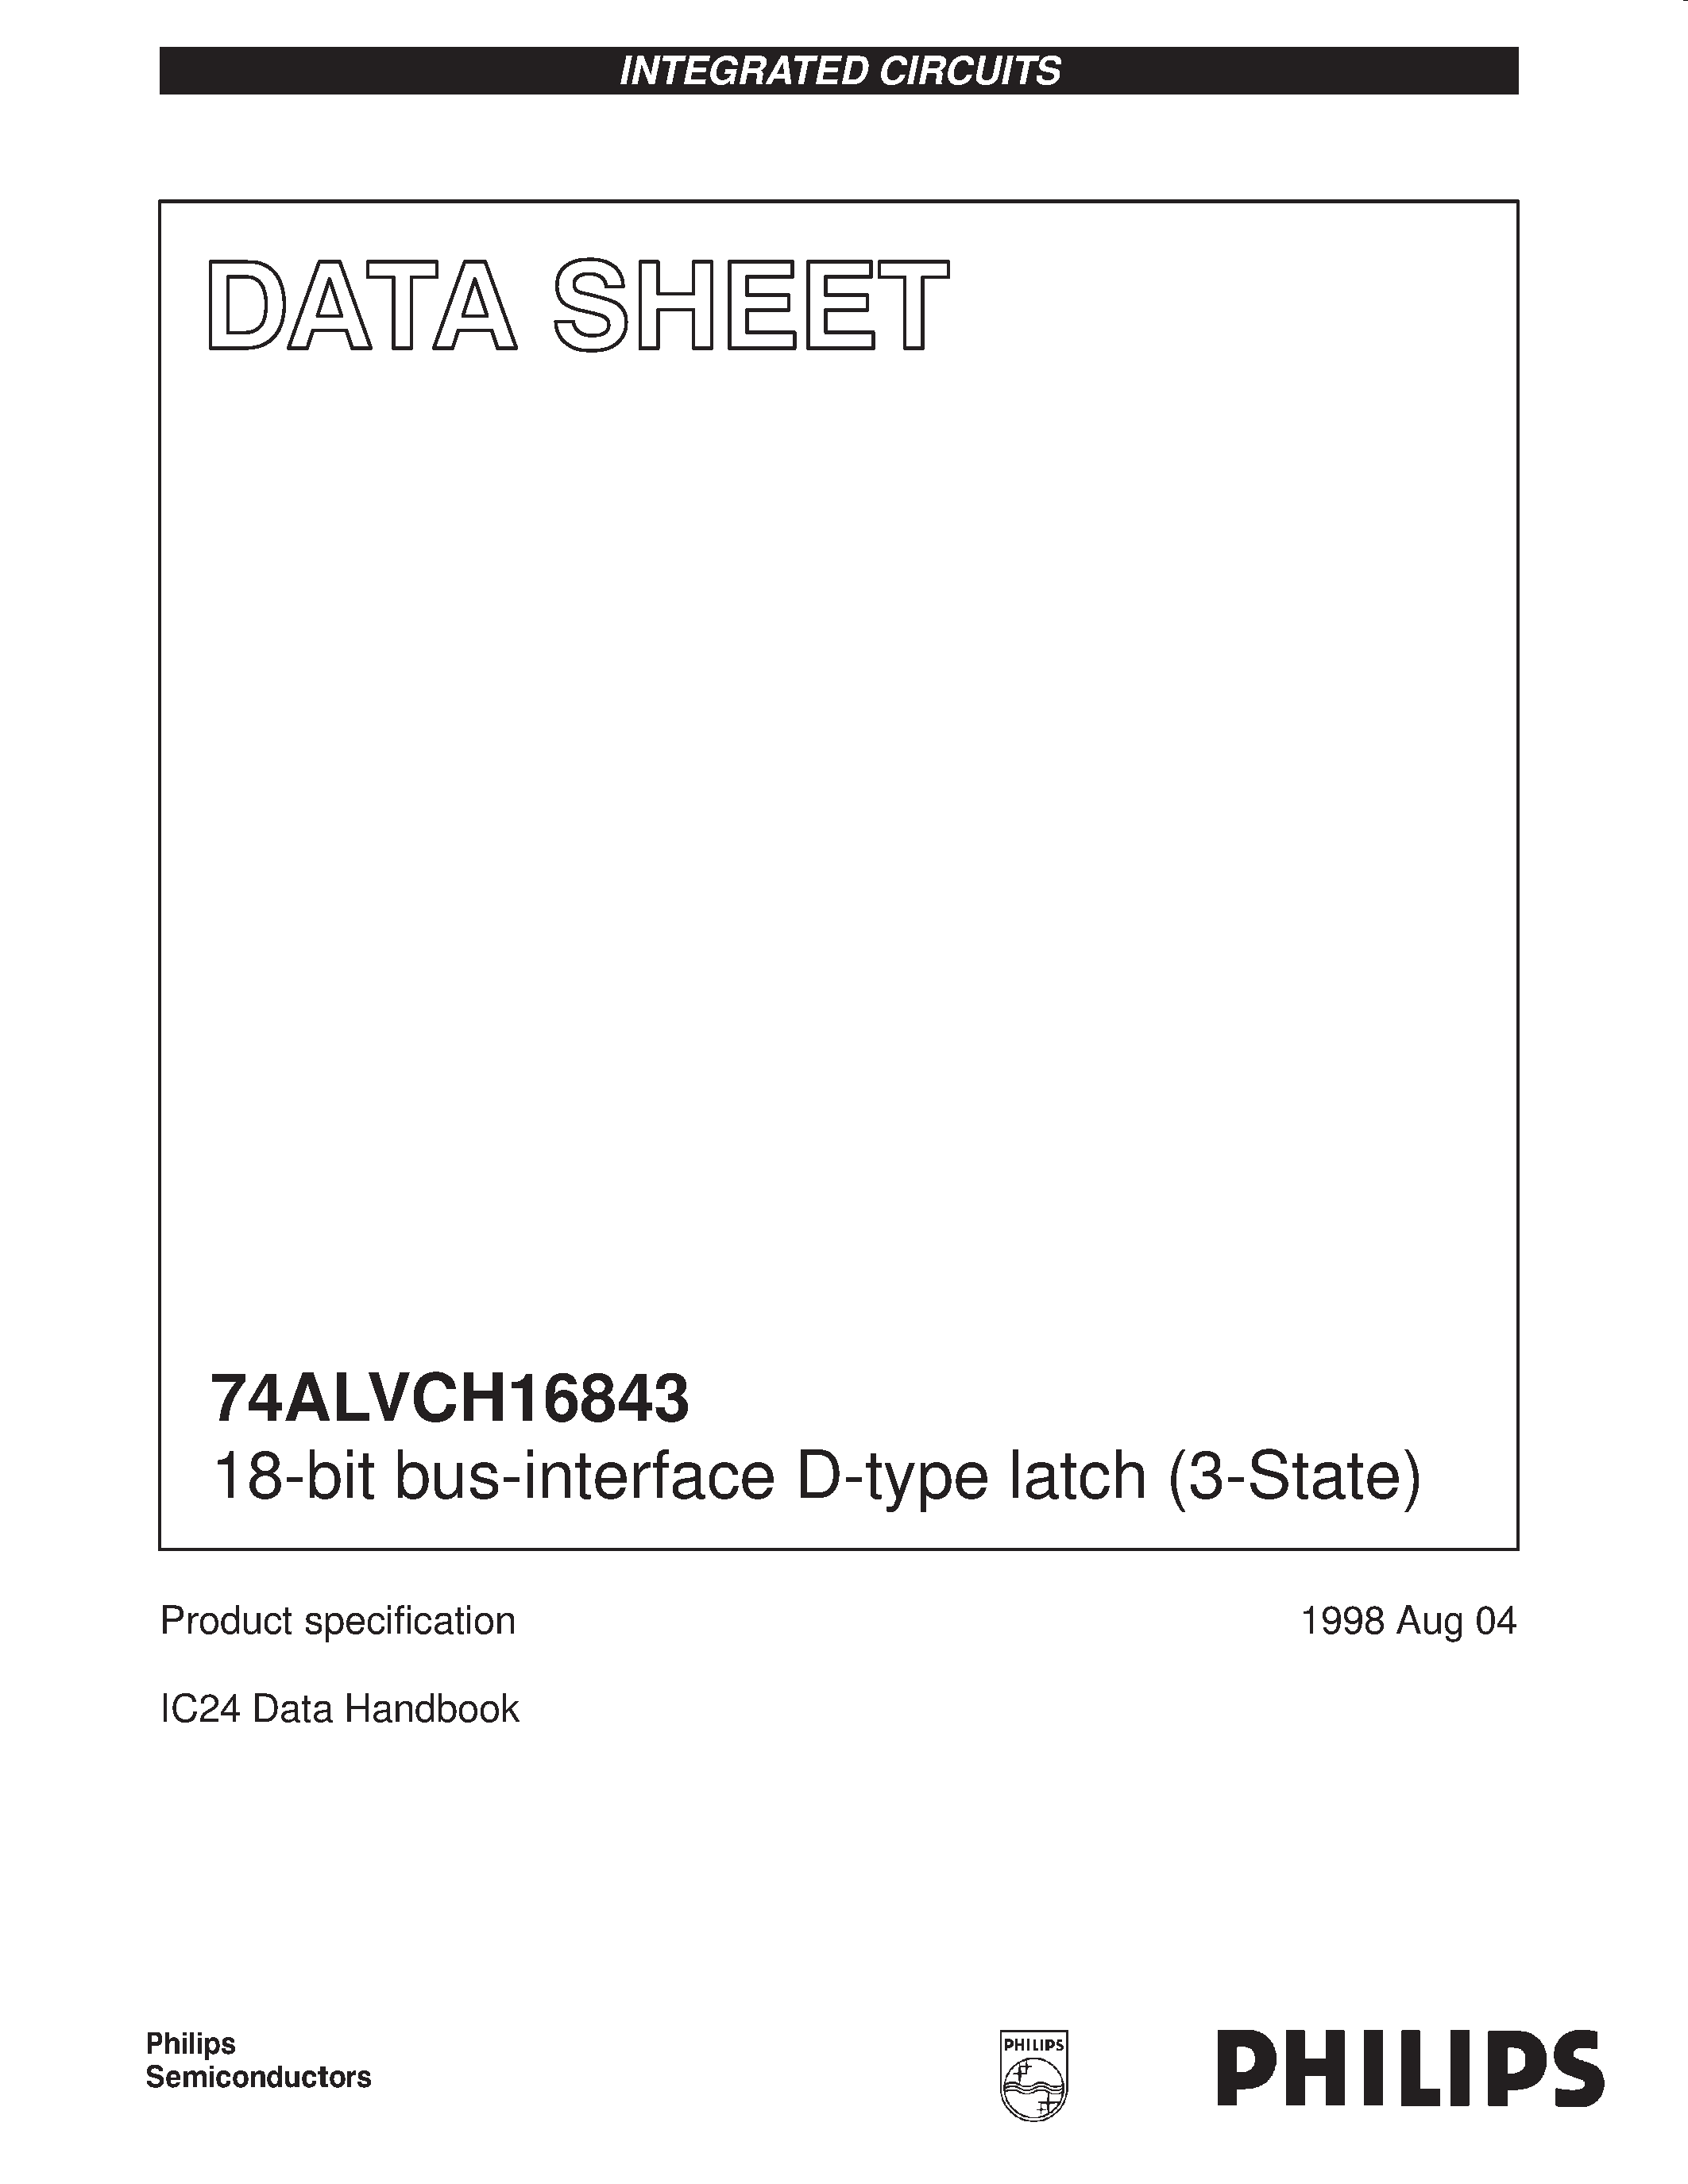 Даташит 74ALVCH16843 - 18-bit bus-interface D-type latch 3-State страница 1